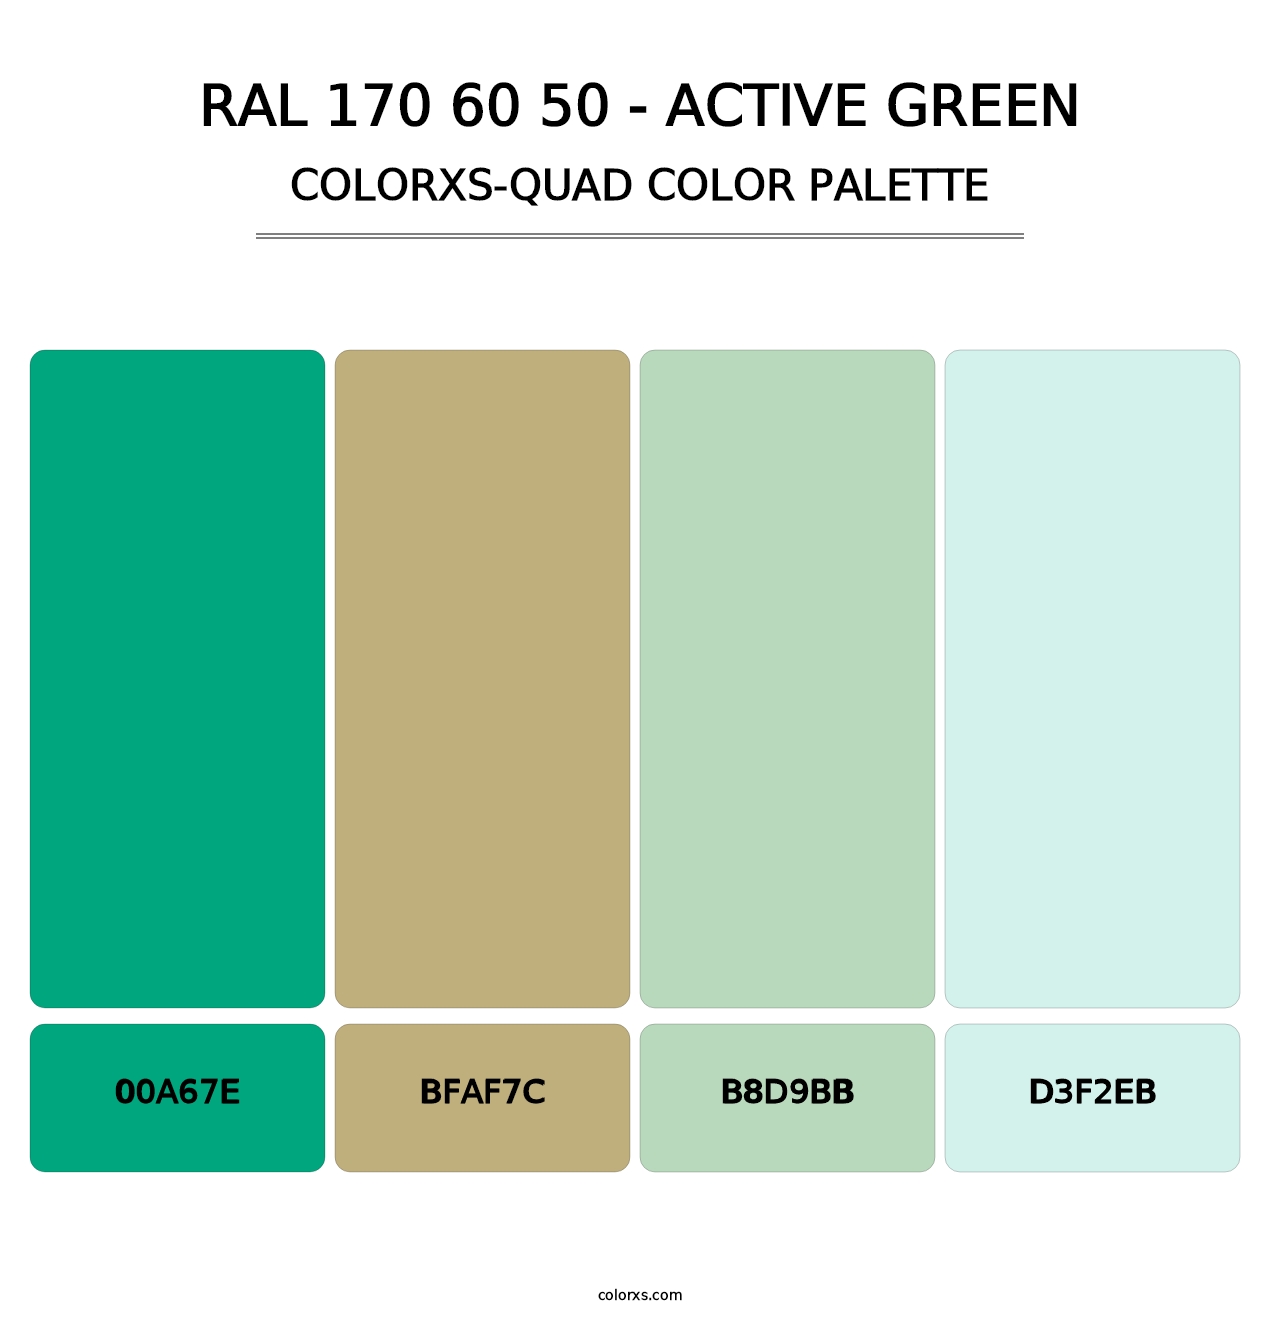 RAL 170 60 50 - Active Green - Colorxs Quad Palette